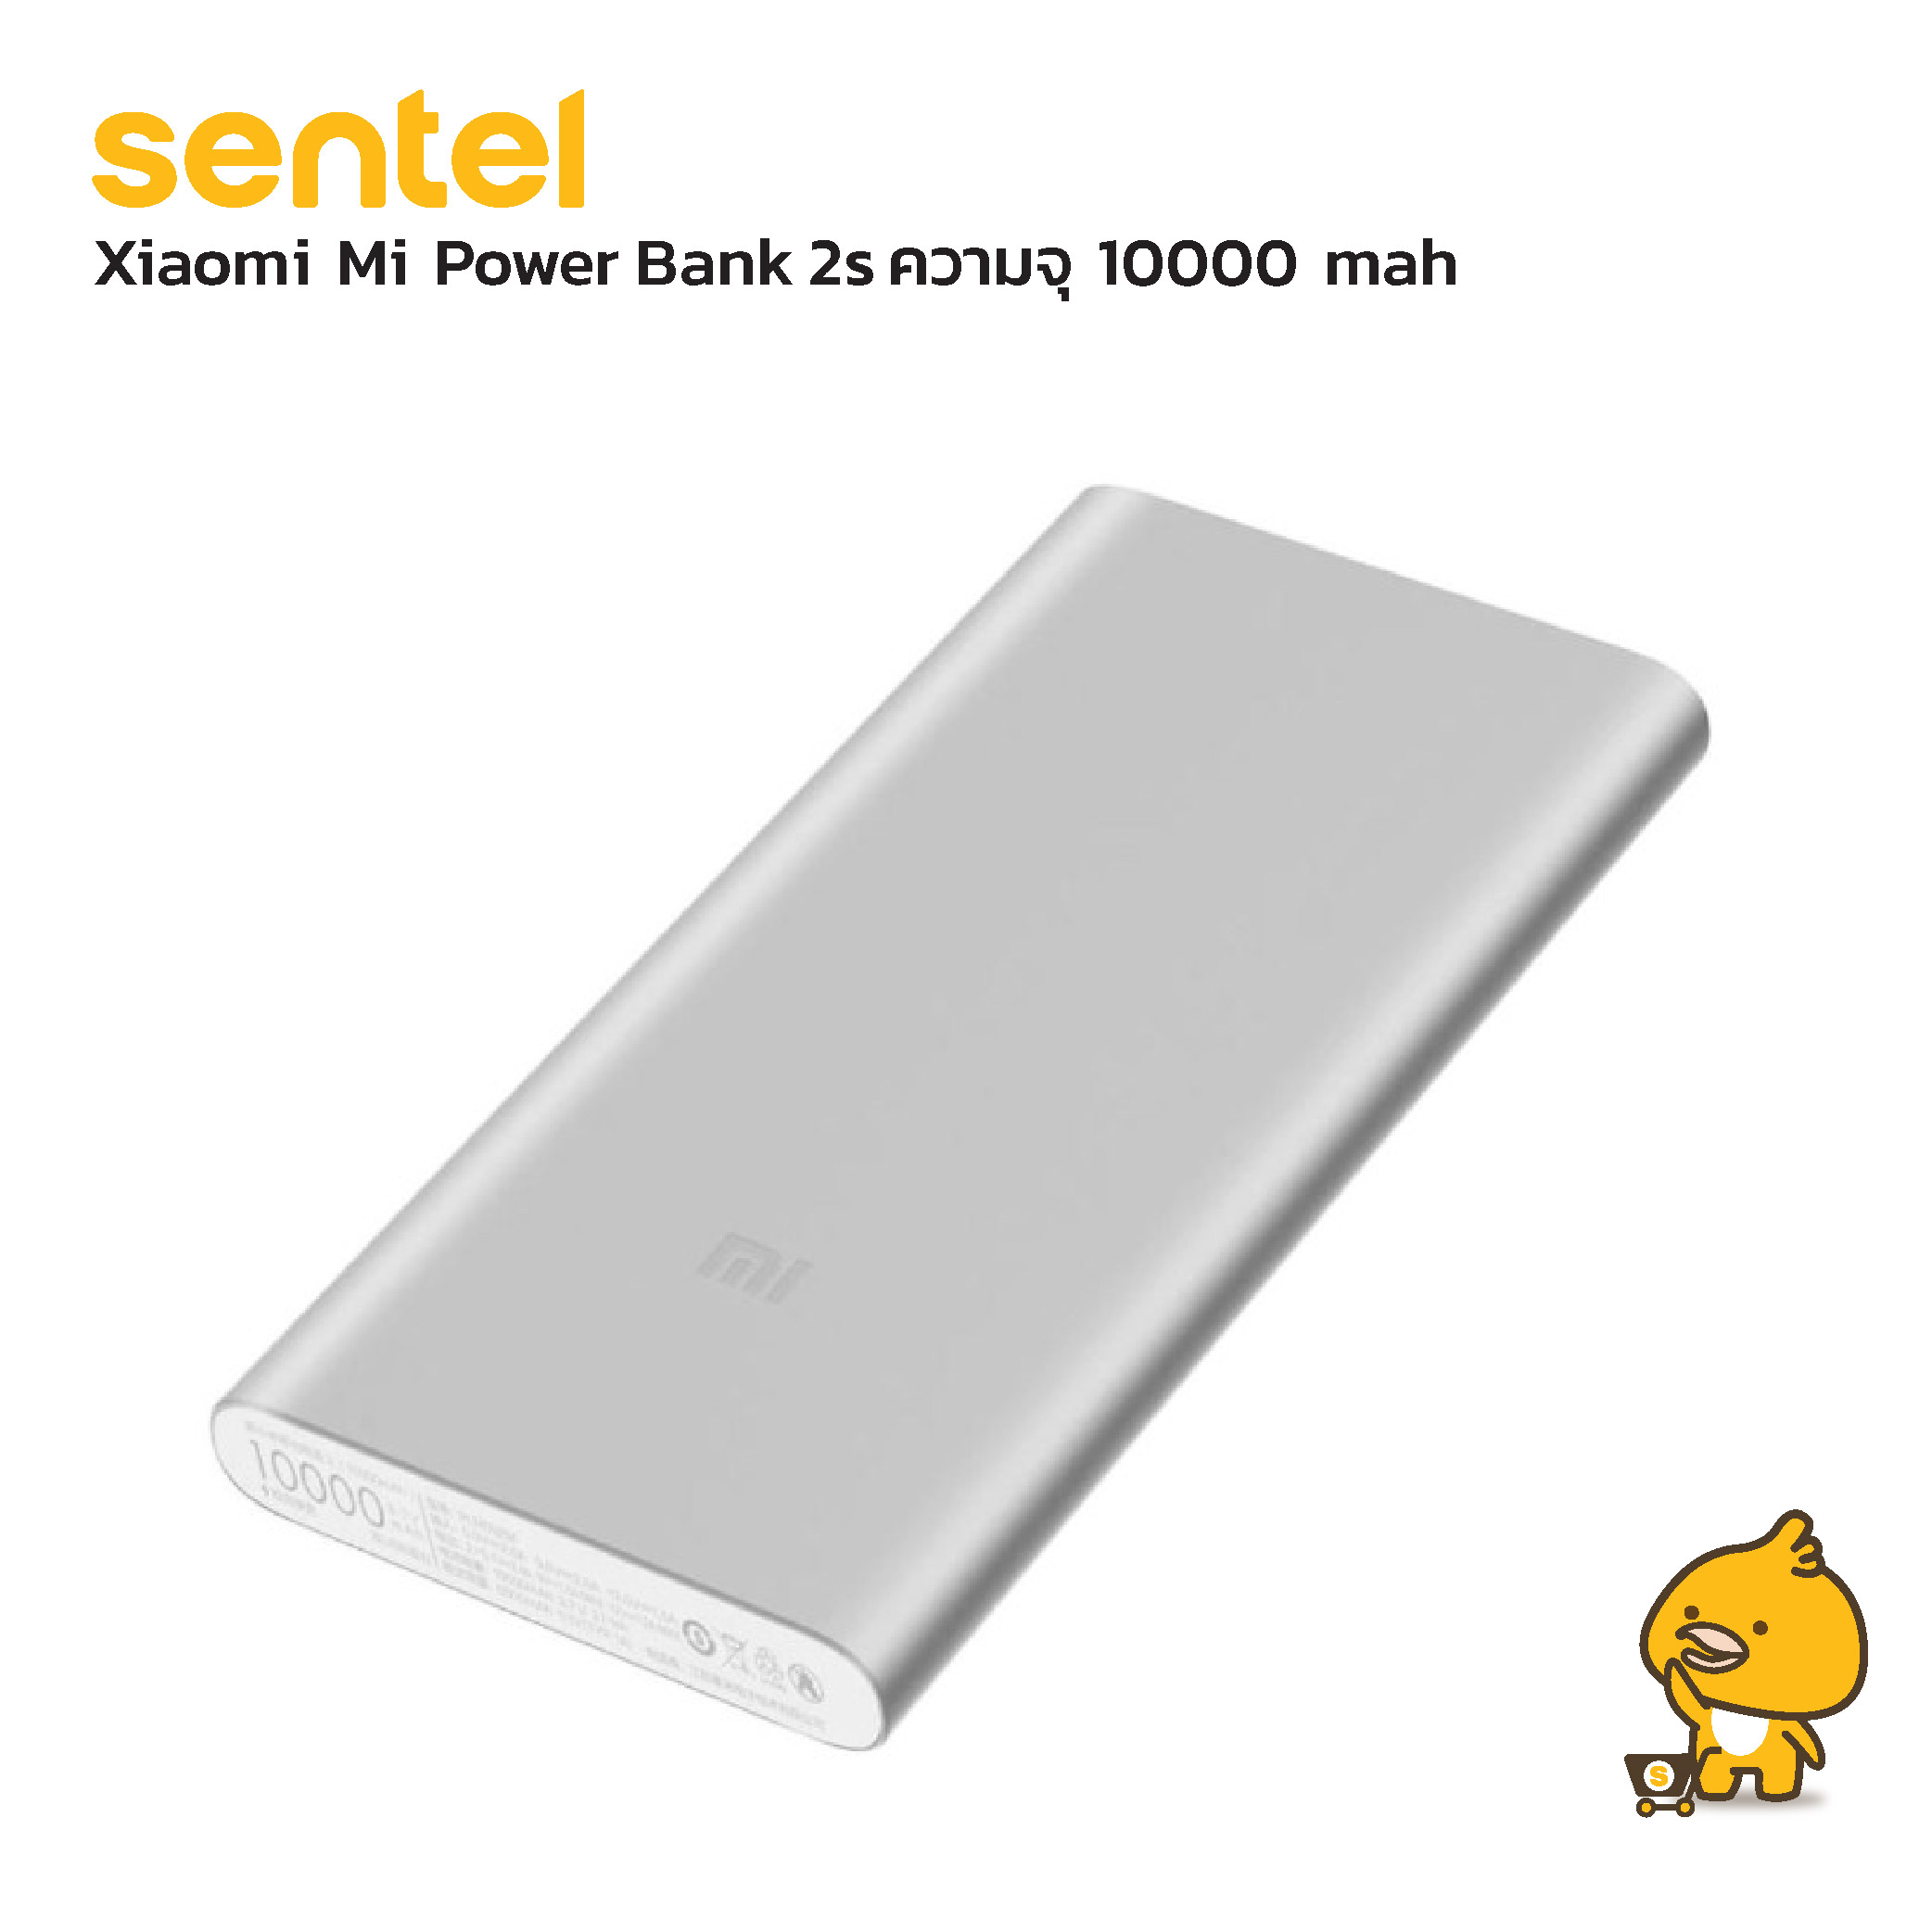 Xiaomi Mi Power Bank 2s Quick Charge 3.0,ความจุ 10000 mah  (รับประกันศูนย์ไทย 6 เดือน)